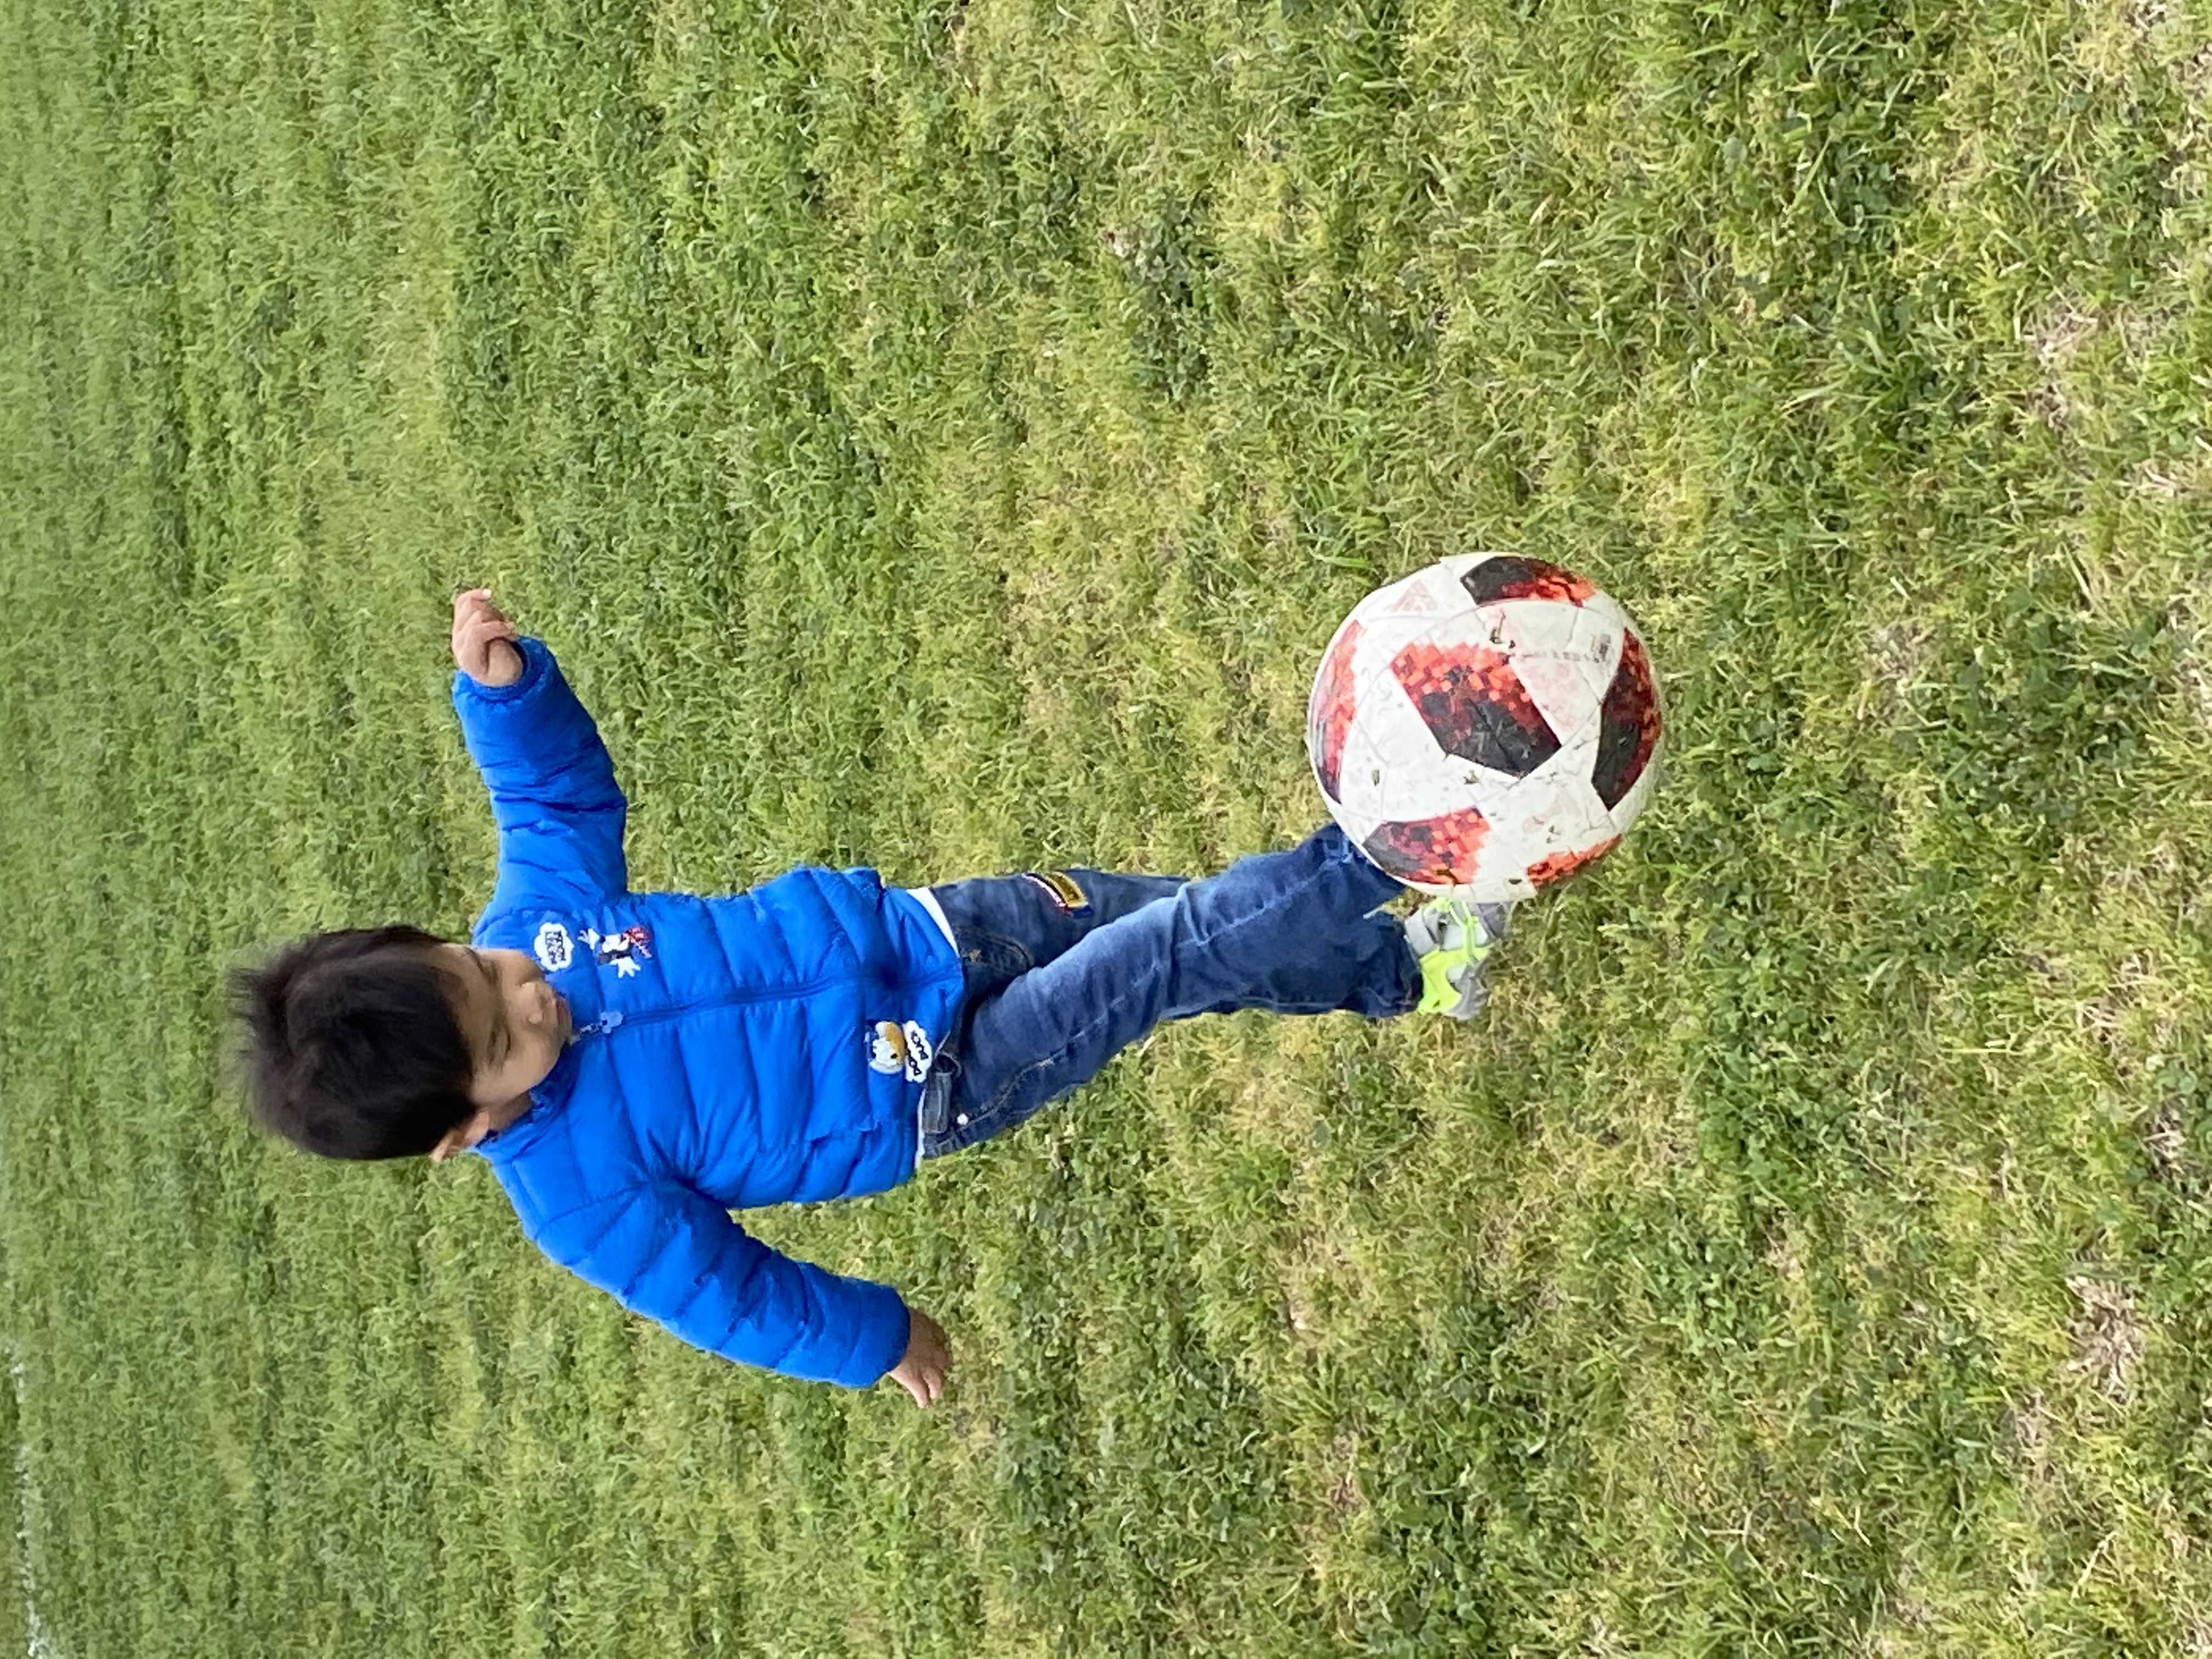 Alex loves play soccer